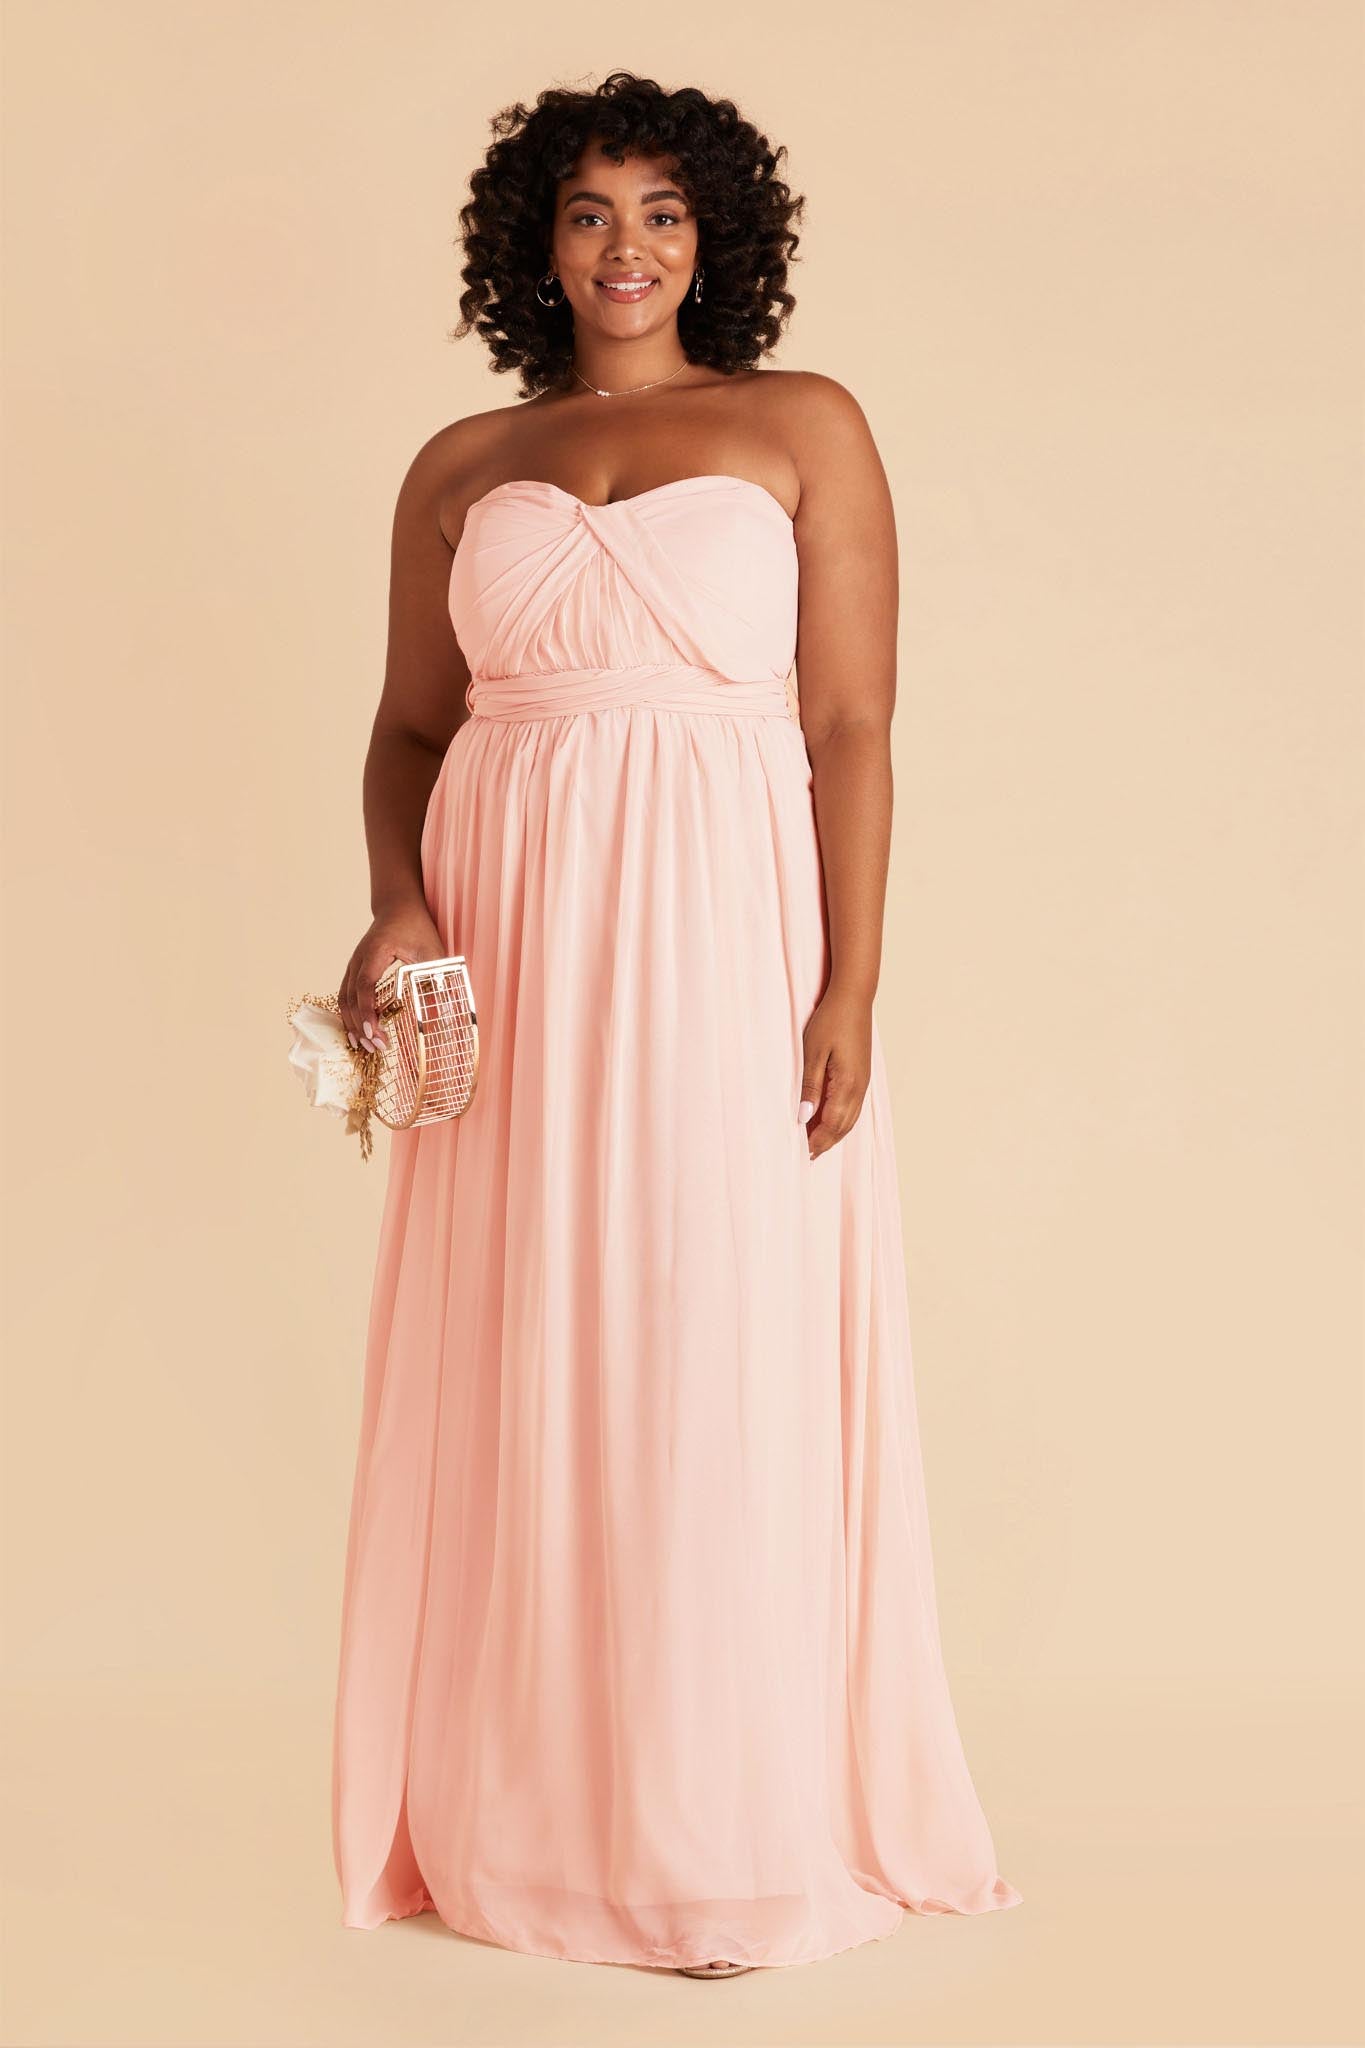 Grace plus size convertible bridesmaid dress in Blush Pink Chiffon by Birdy Grey